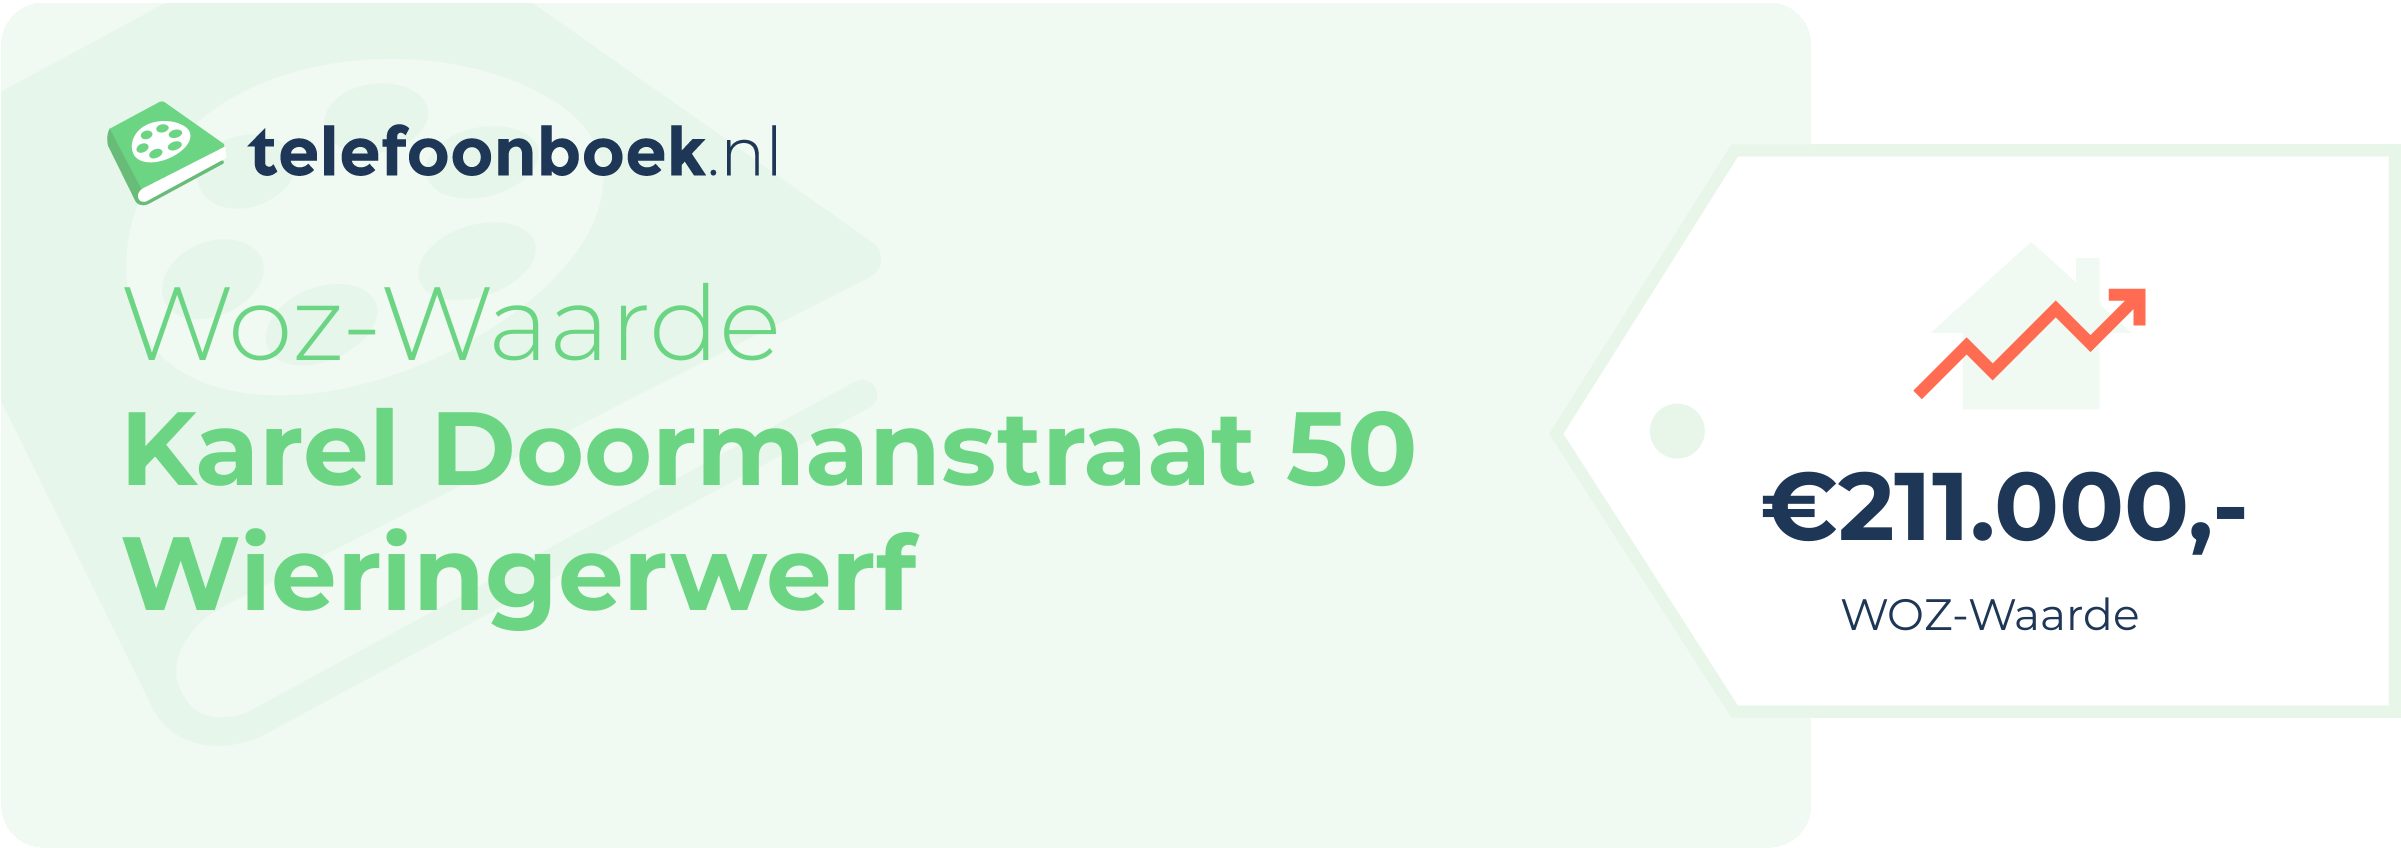 WOZ-waarde Karel Doormanstraat 50 Wieringerwerf